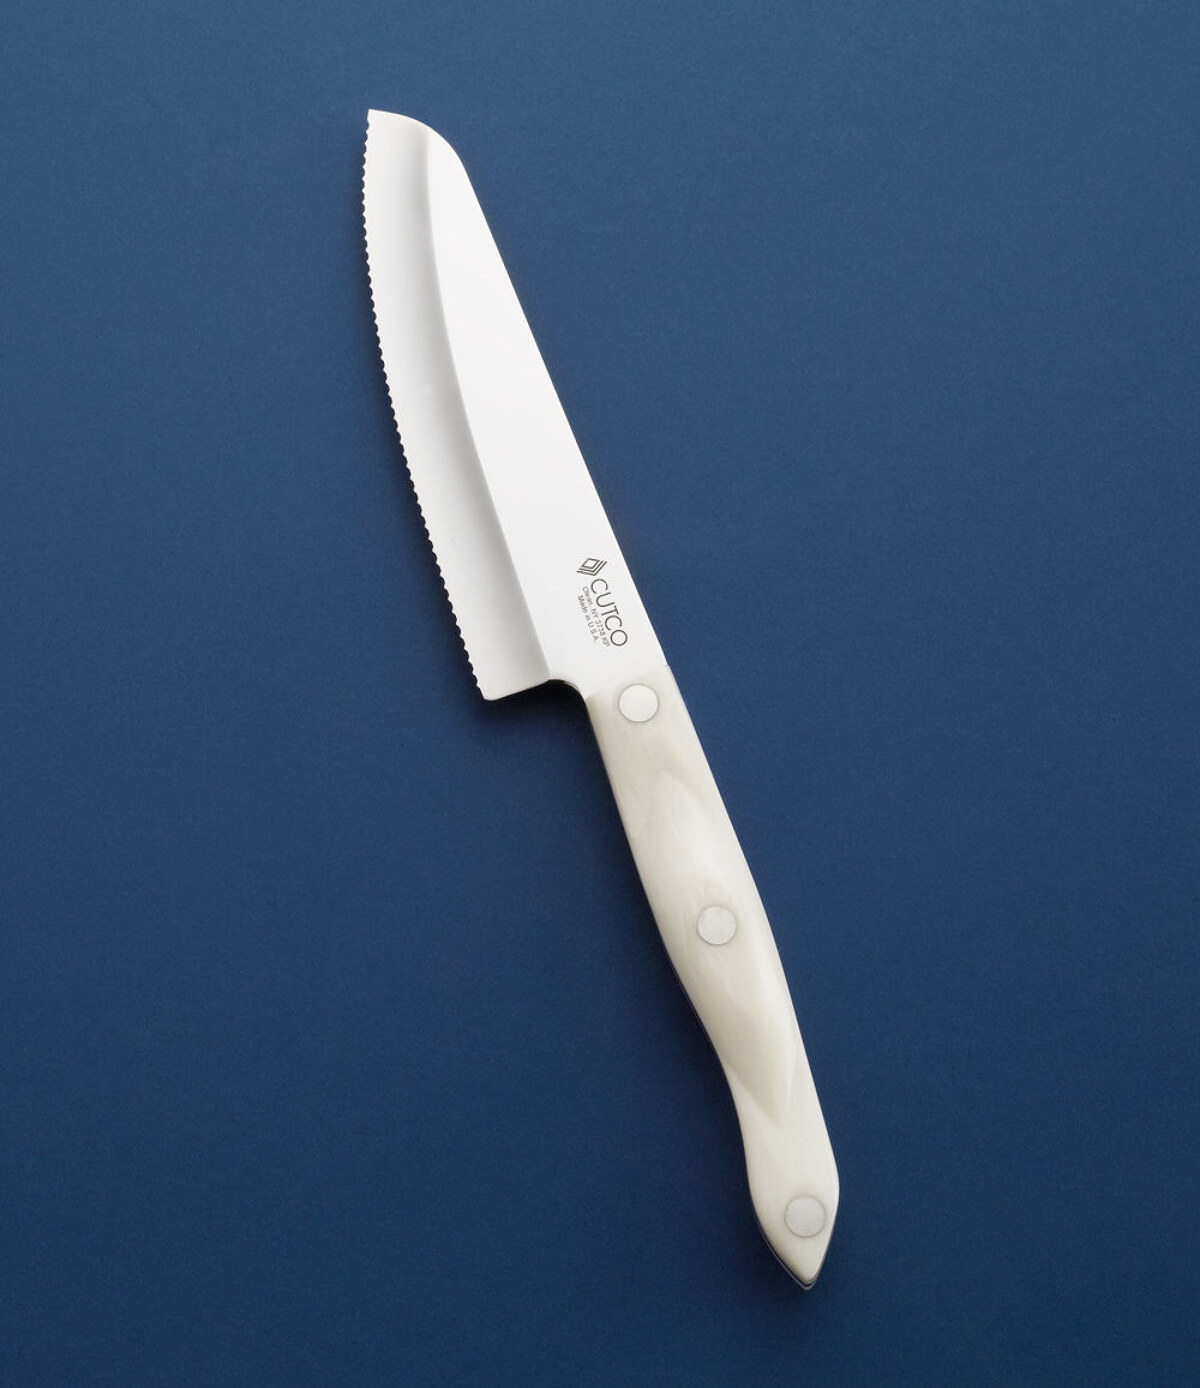 2 Cutco Sheath 3738-2 for a cutco knife,made in the usa 